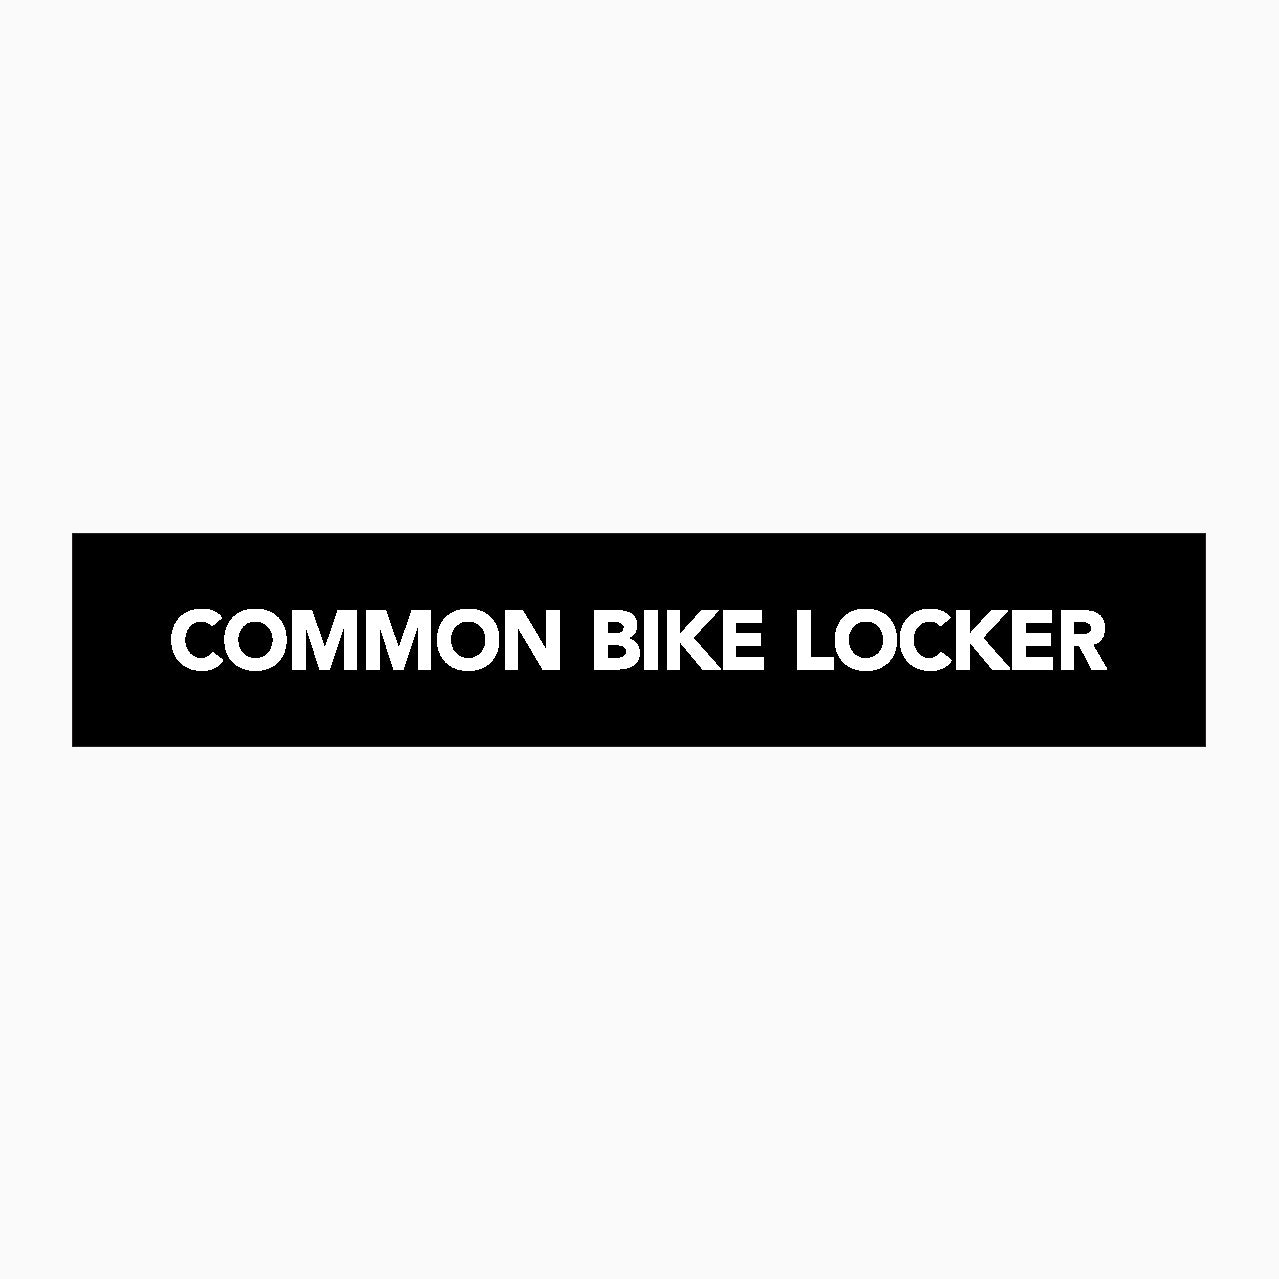 COMMON BIKE LOCKER SIGN